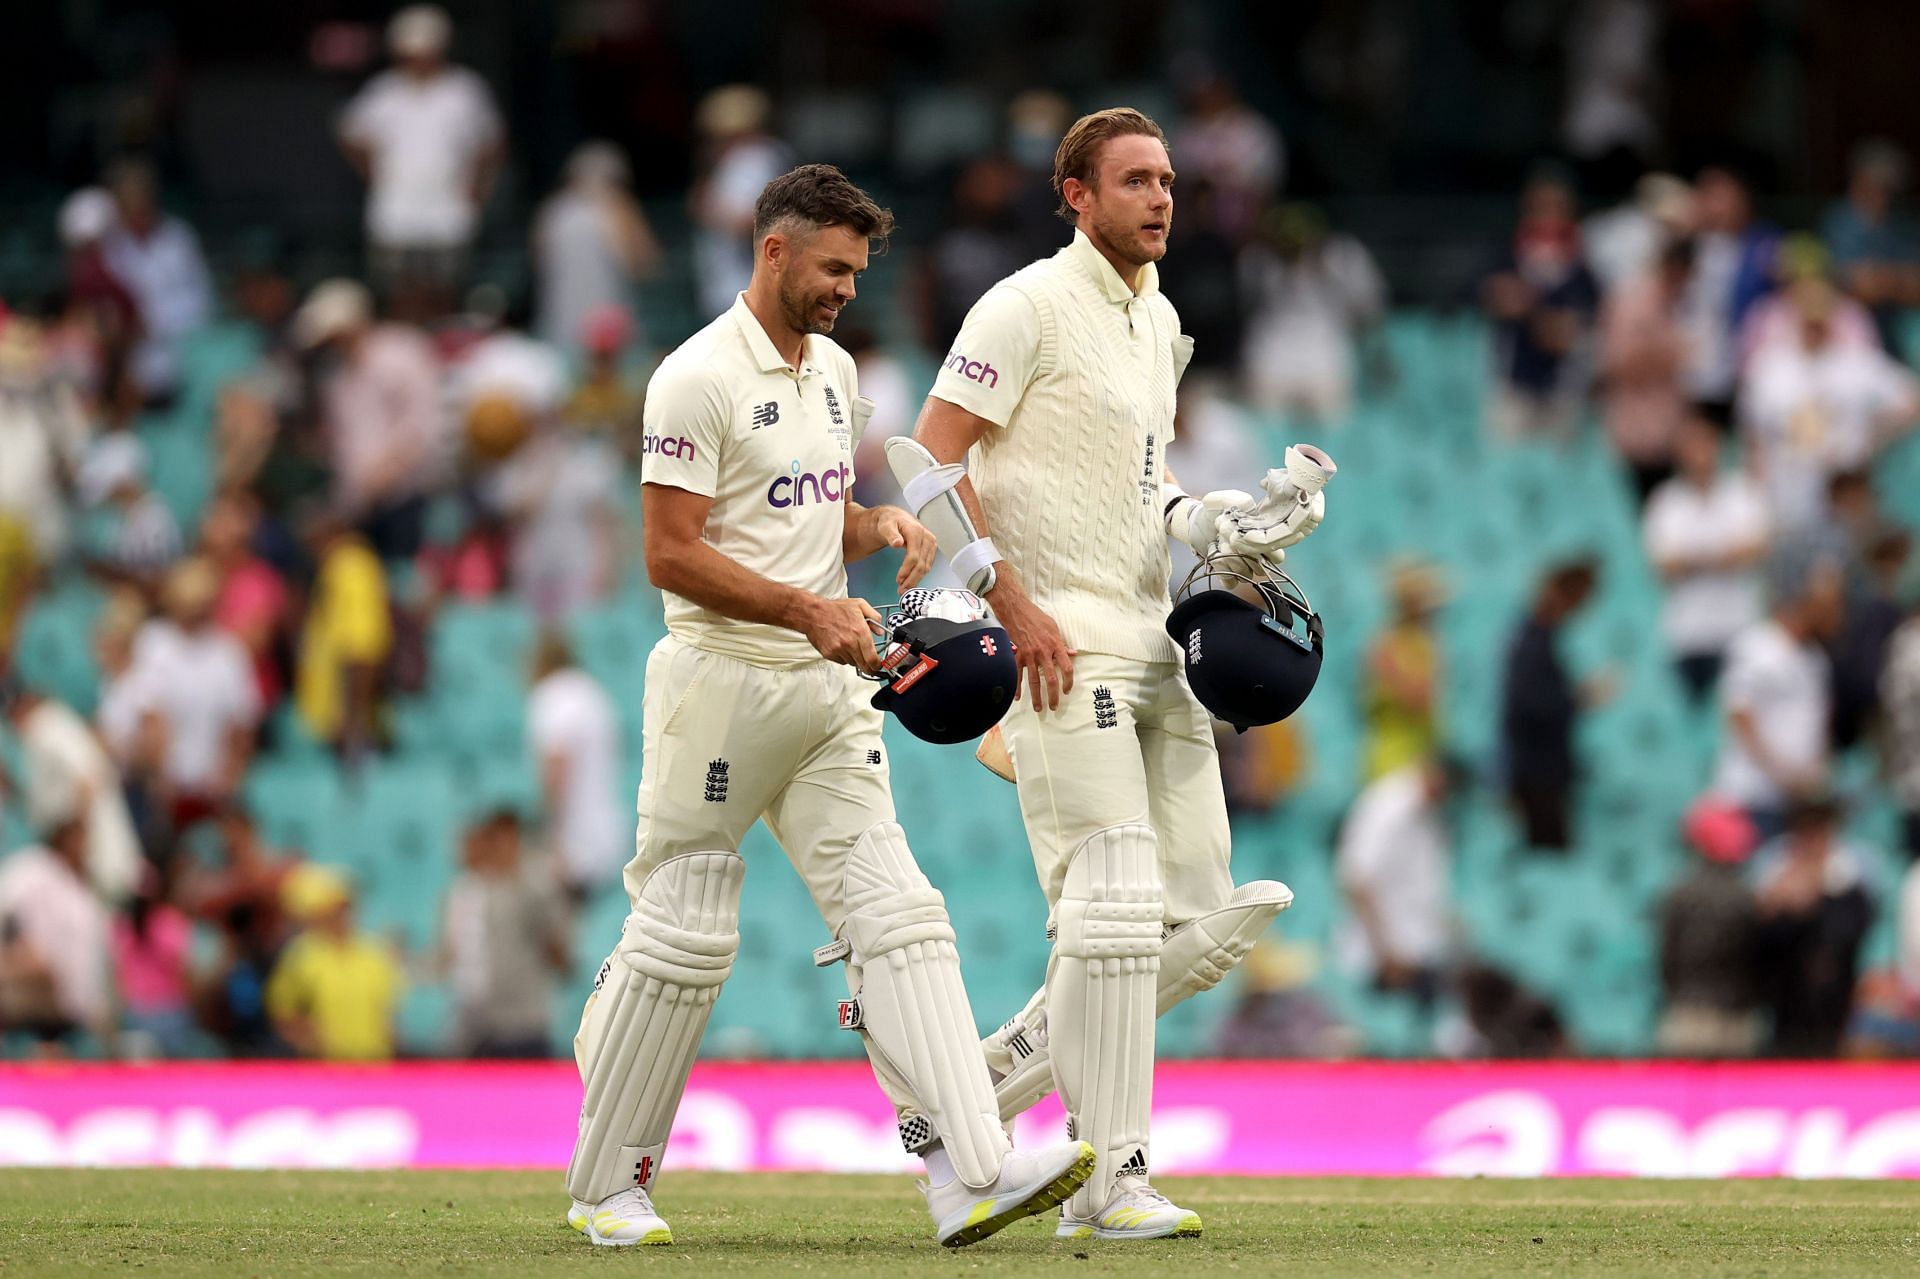 Australia v England - 4th Test: Day 5